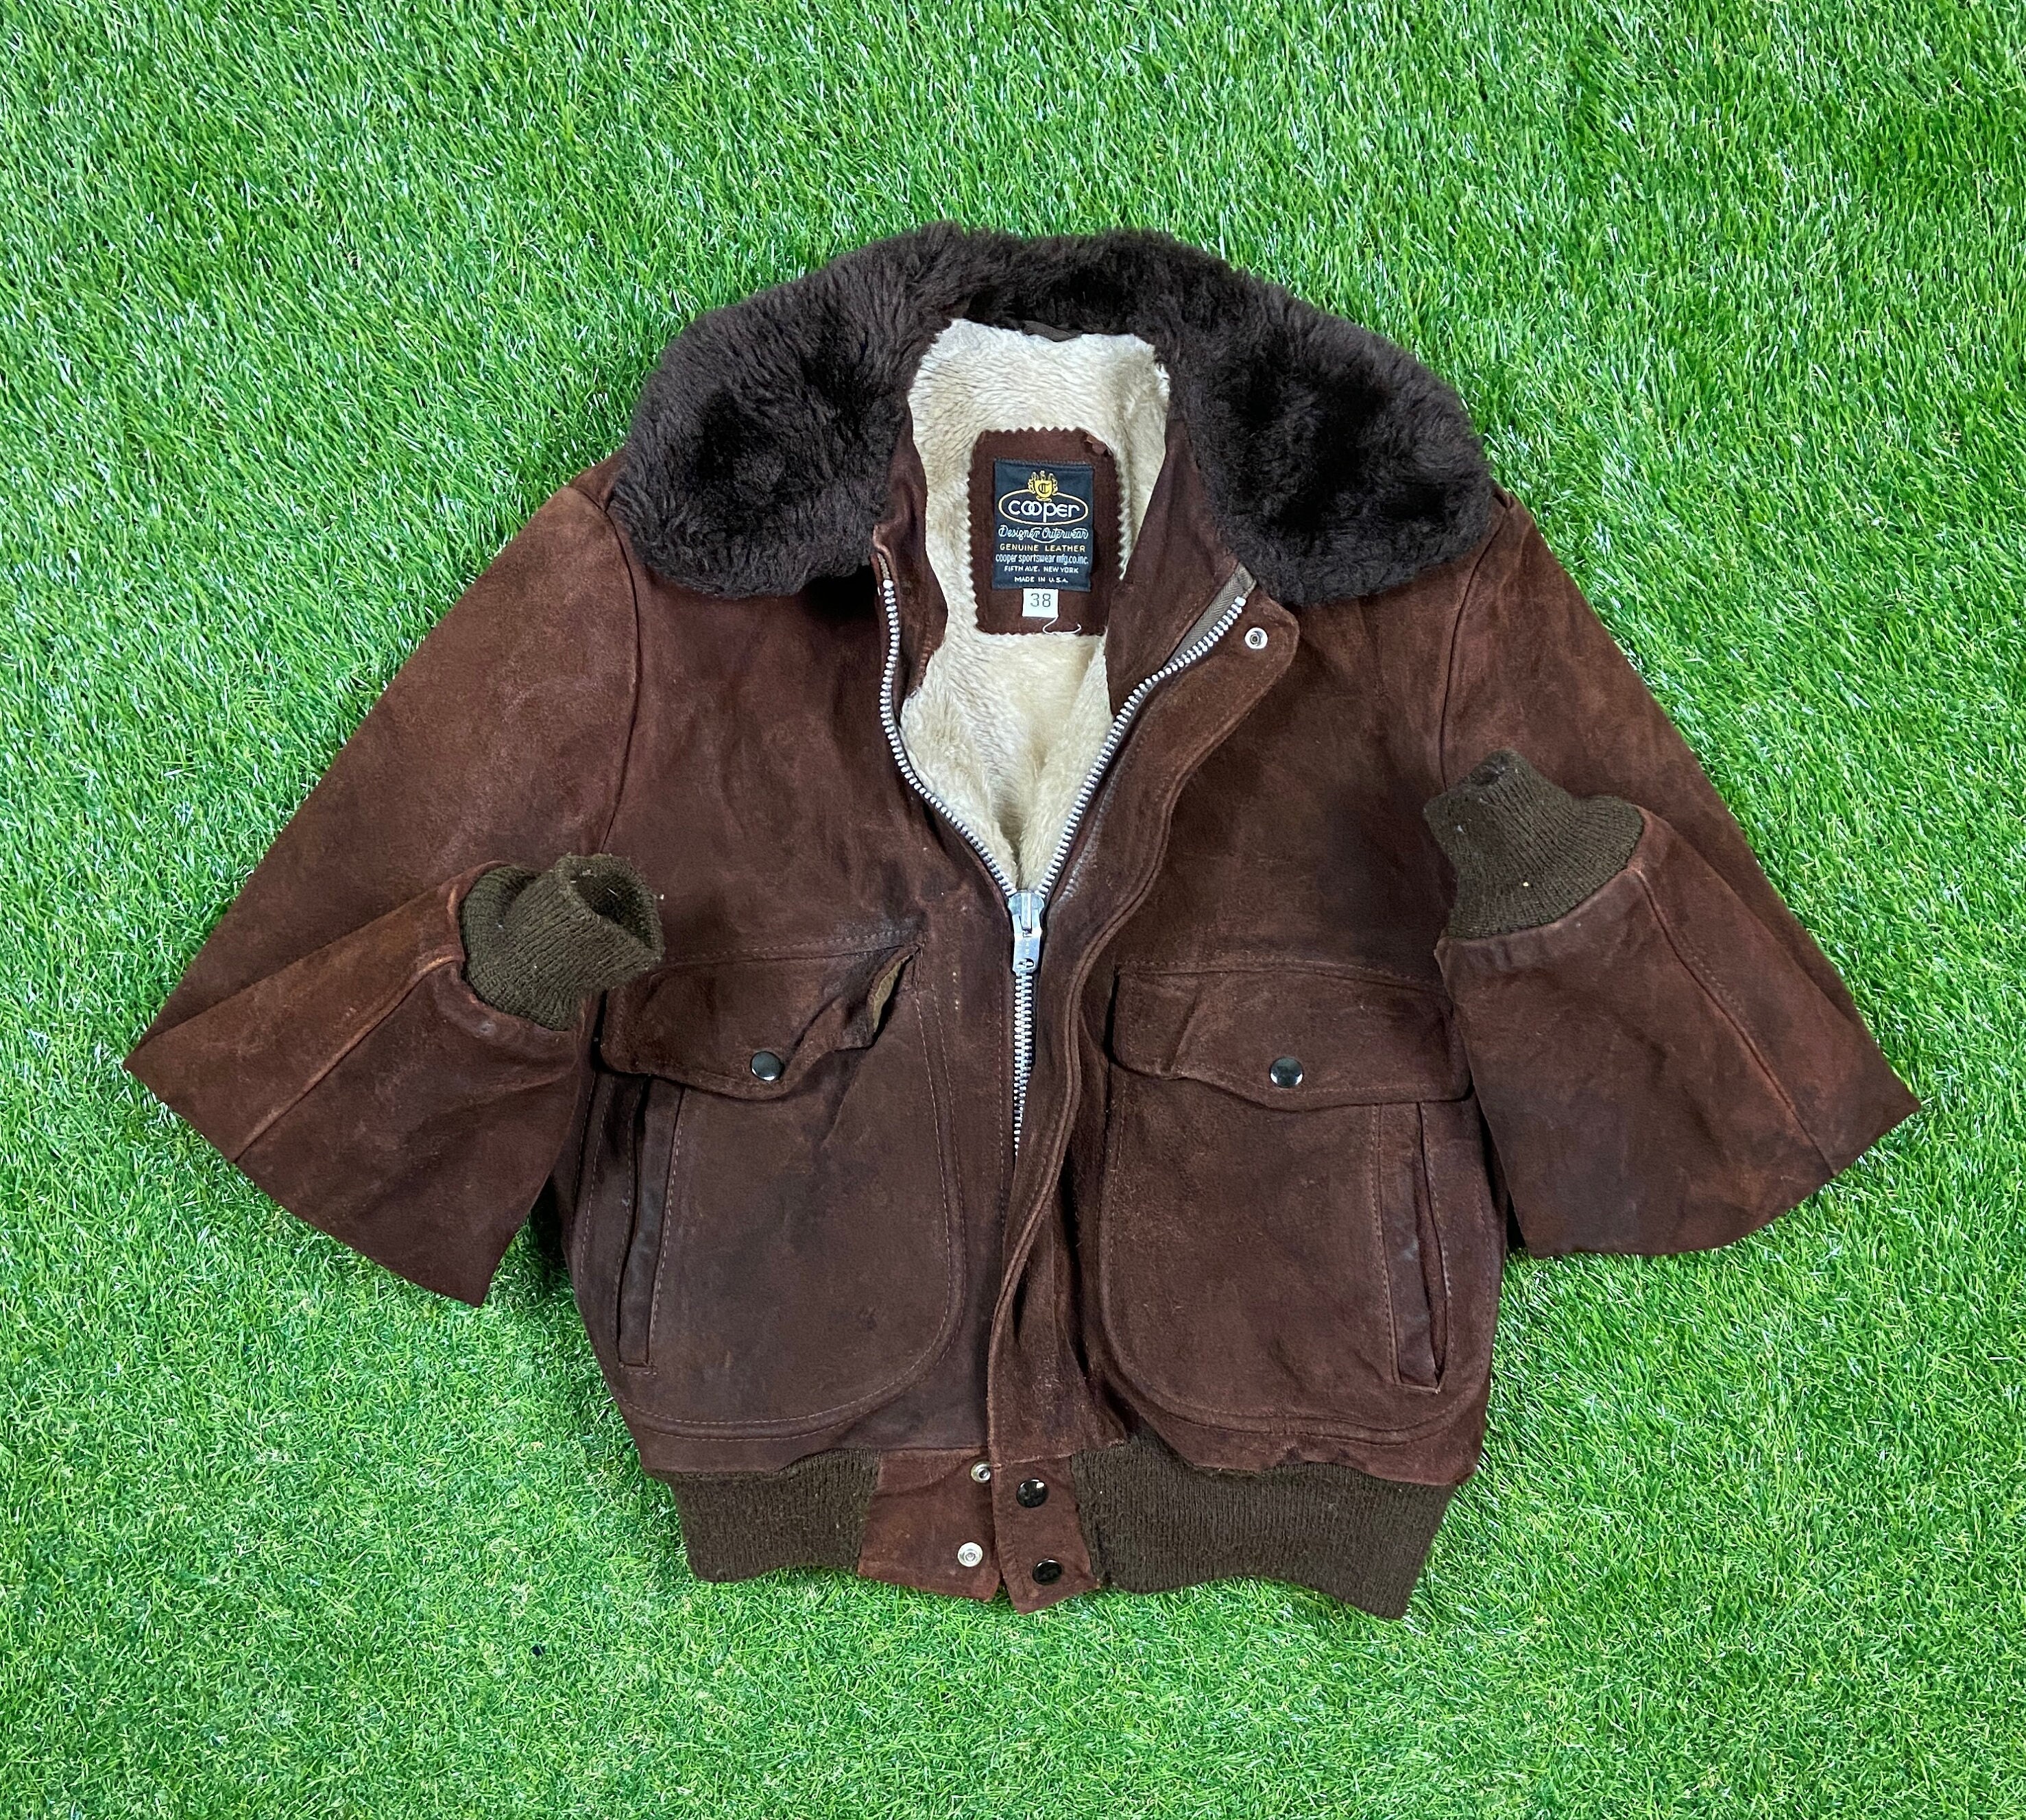 Mini Cooper Fleece Jacket Polar Coat Veste Mantel Blouson Sport Tuning Gift